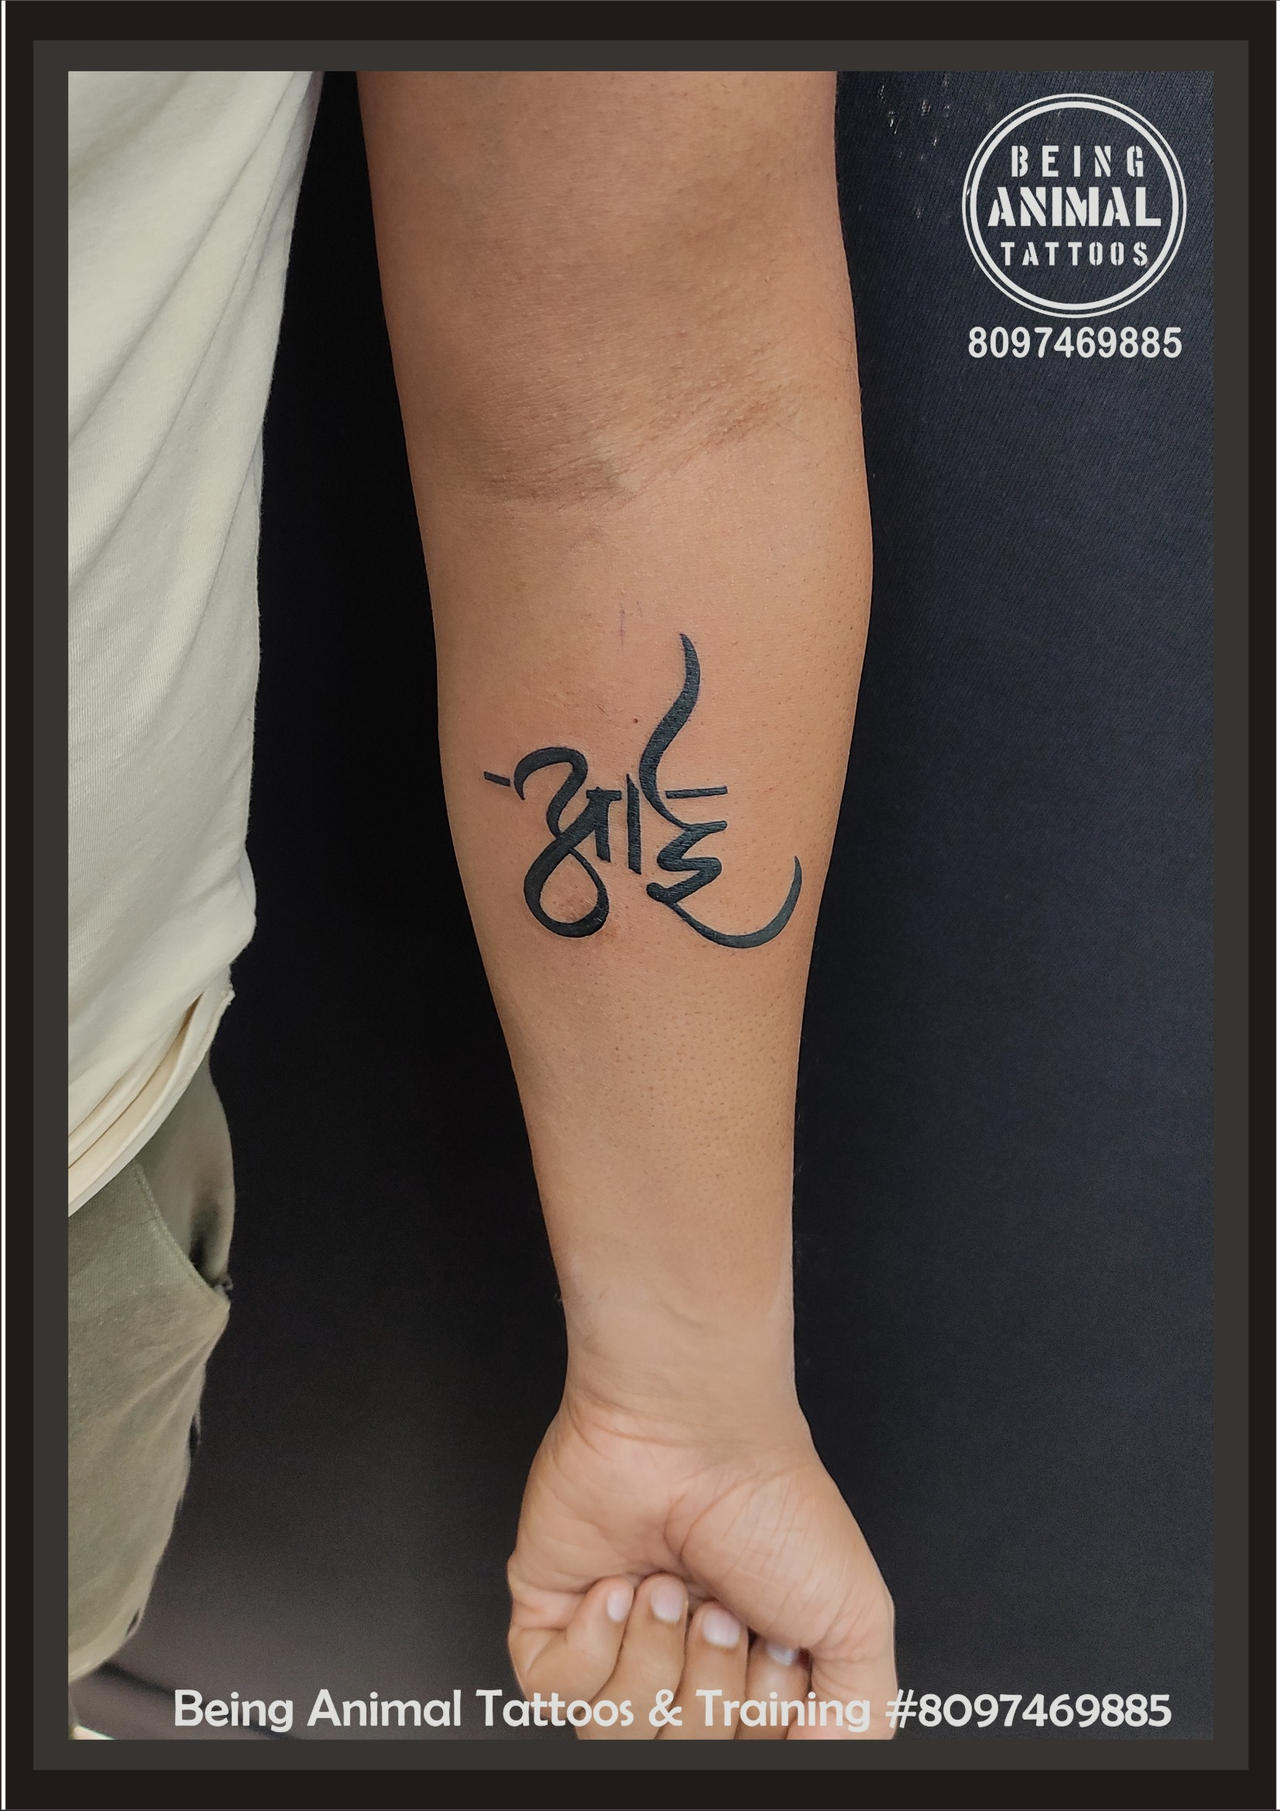 Aai marathi calligraphy tattoo on hand by Samarveera2008 on DeviantArt